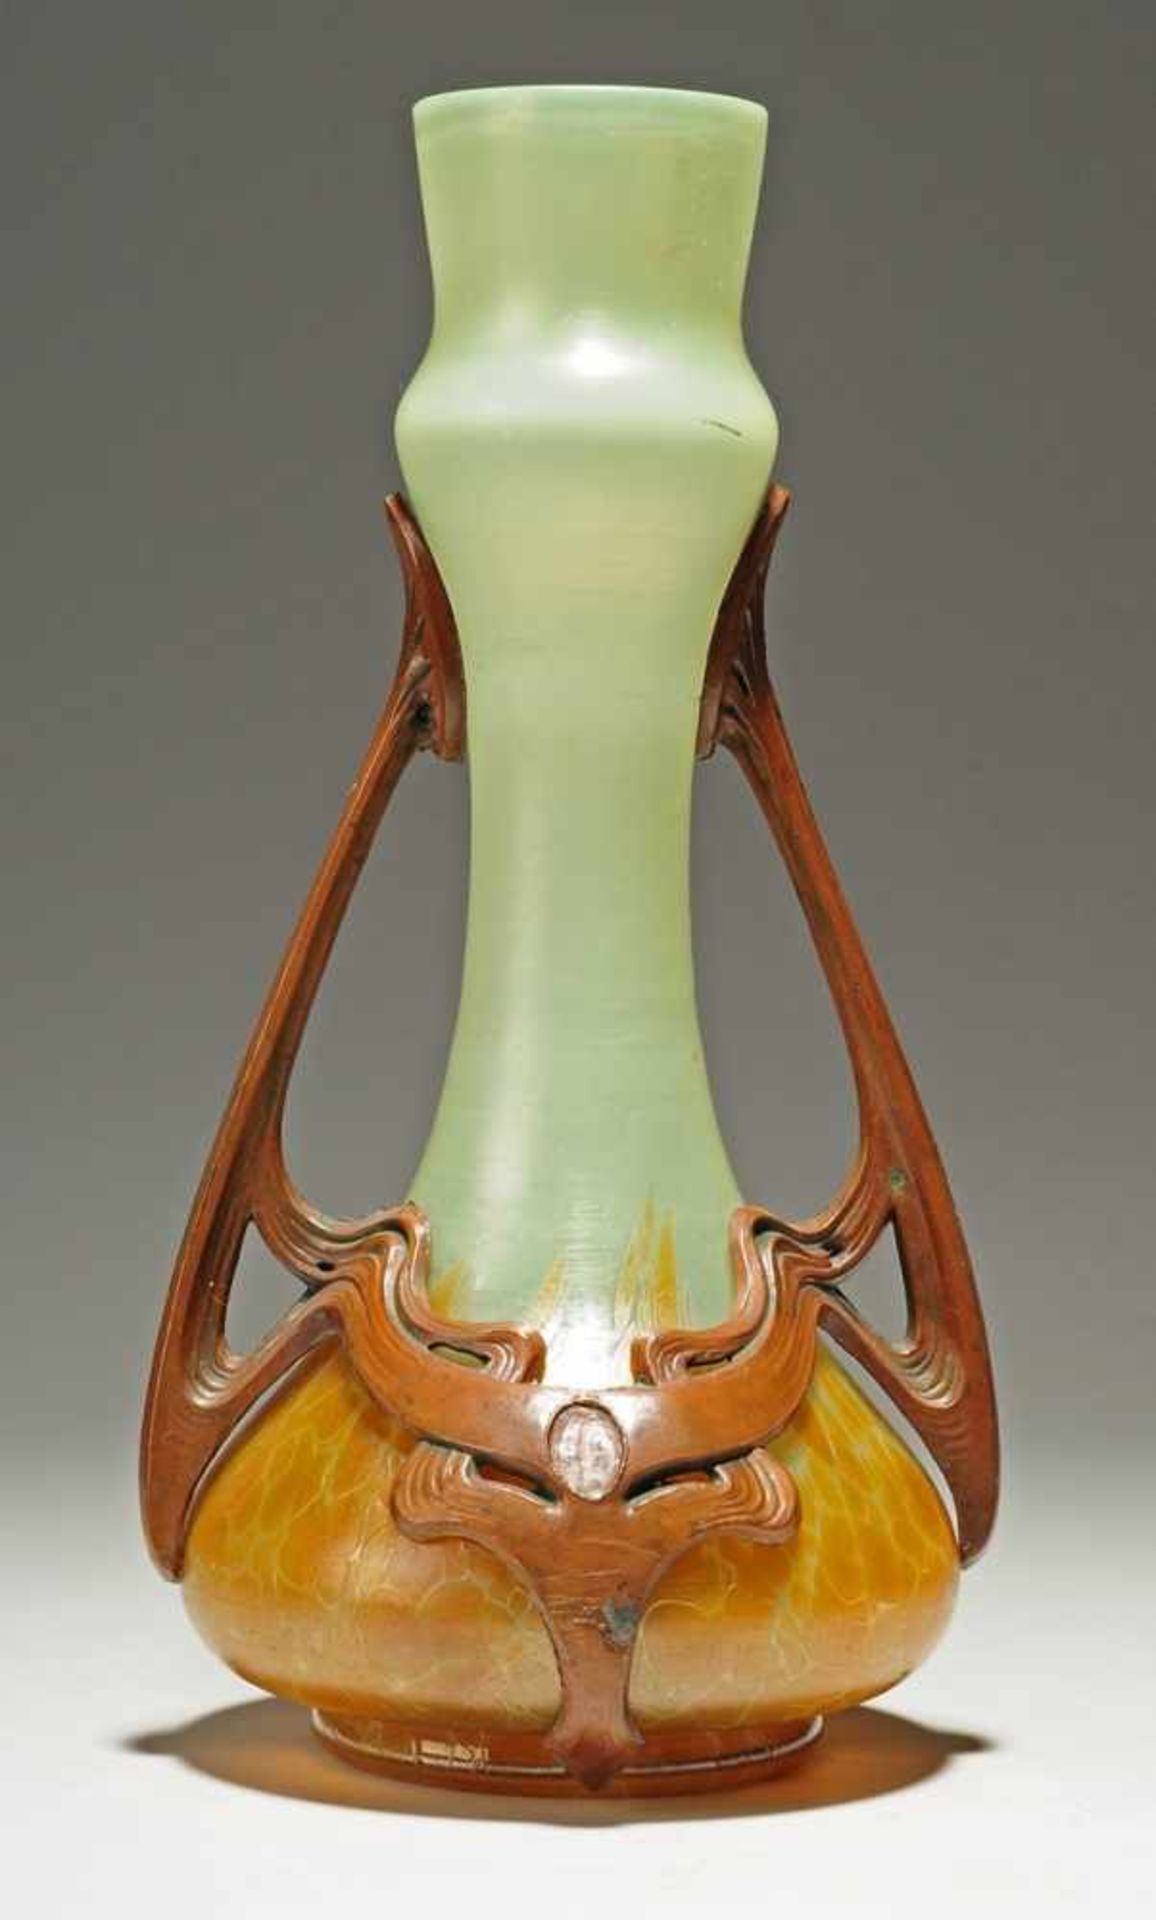 Jugendstil-Vase Lichtgrünes Glas, Opalglasunterfang, eingeschmolzene orangebraune Krösel.